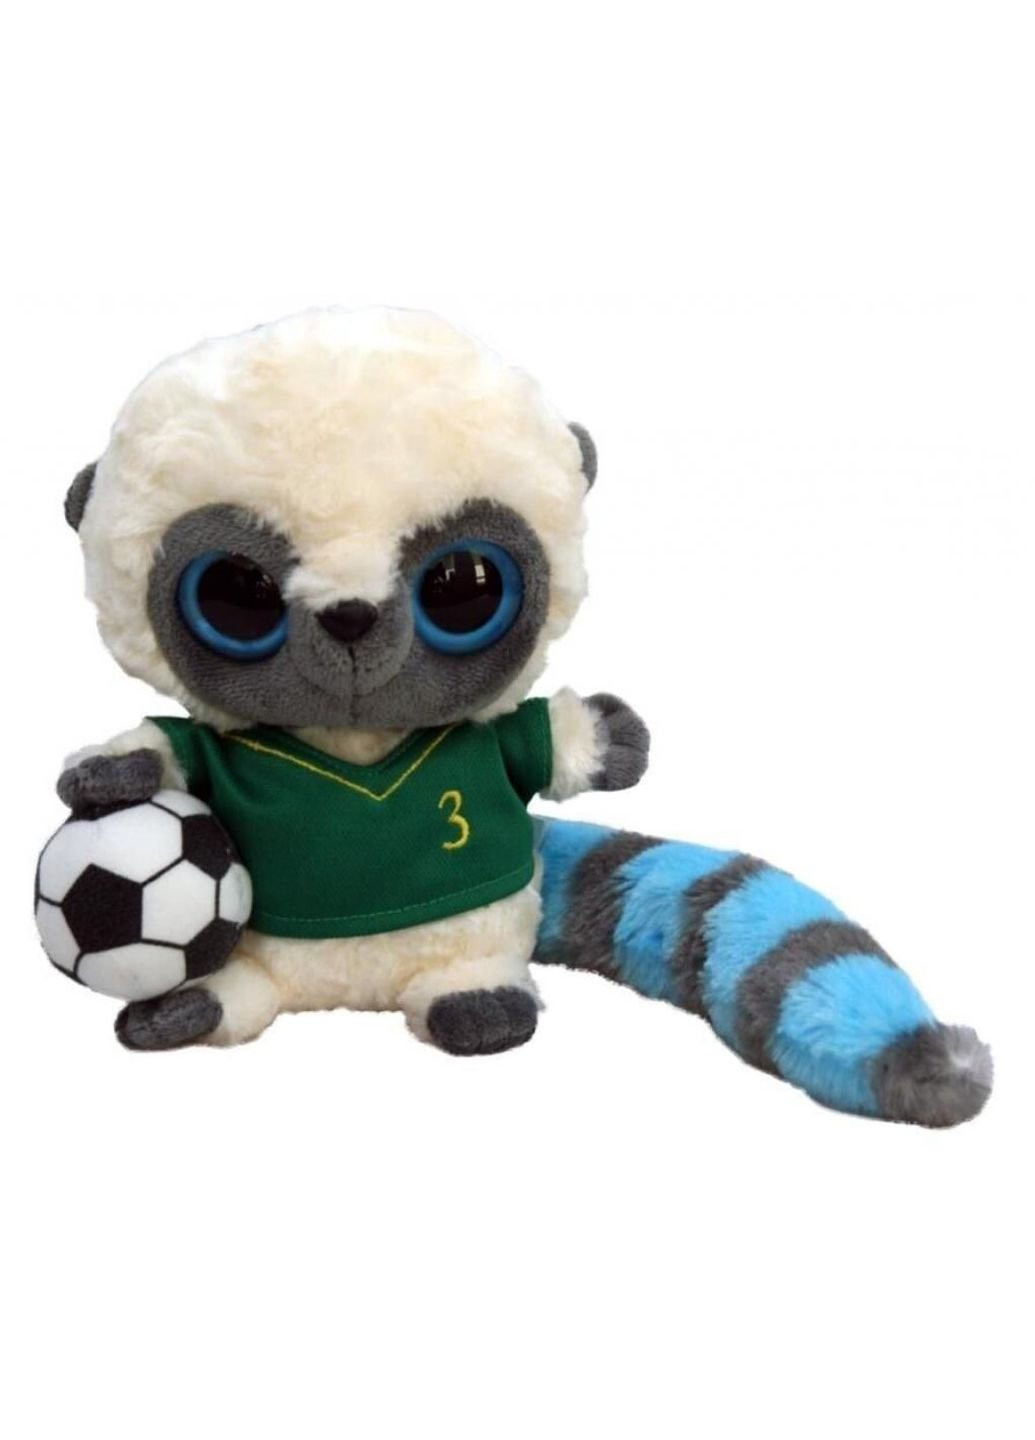 Мягкая игрушка Yoohoo Футболист зеленая футболка 12 см (91303R) Aurora (252246847)